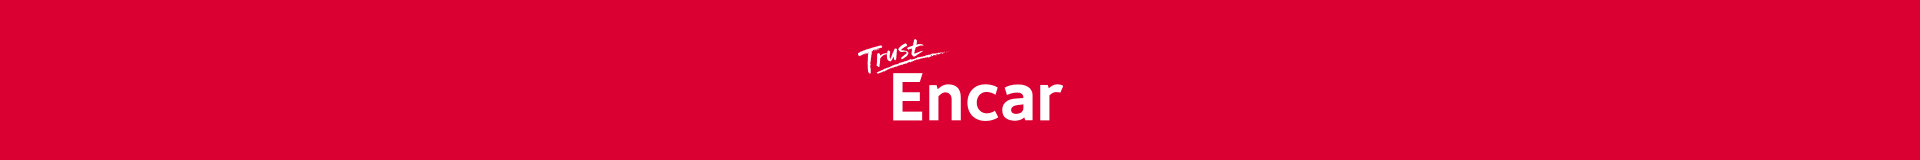 trust encar